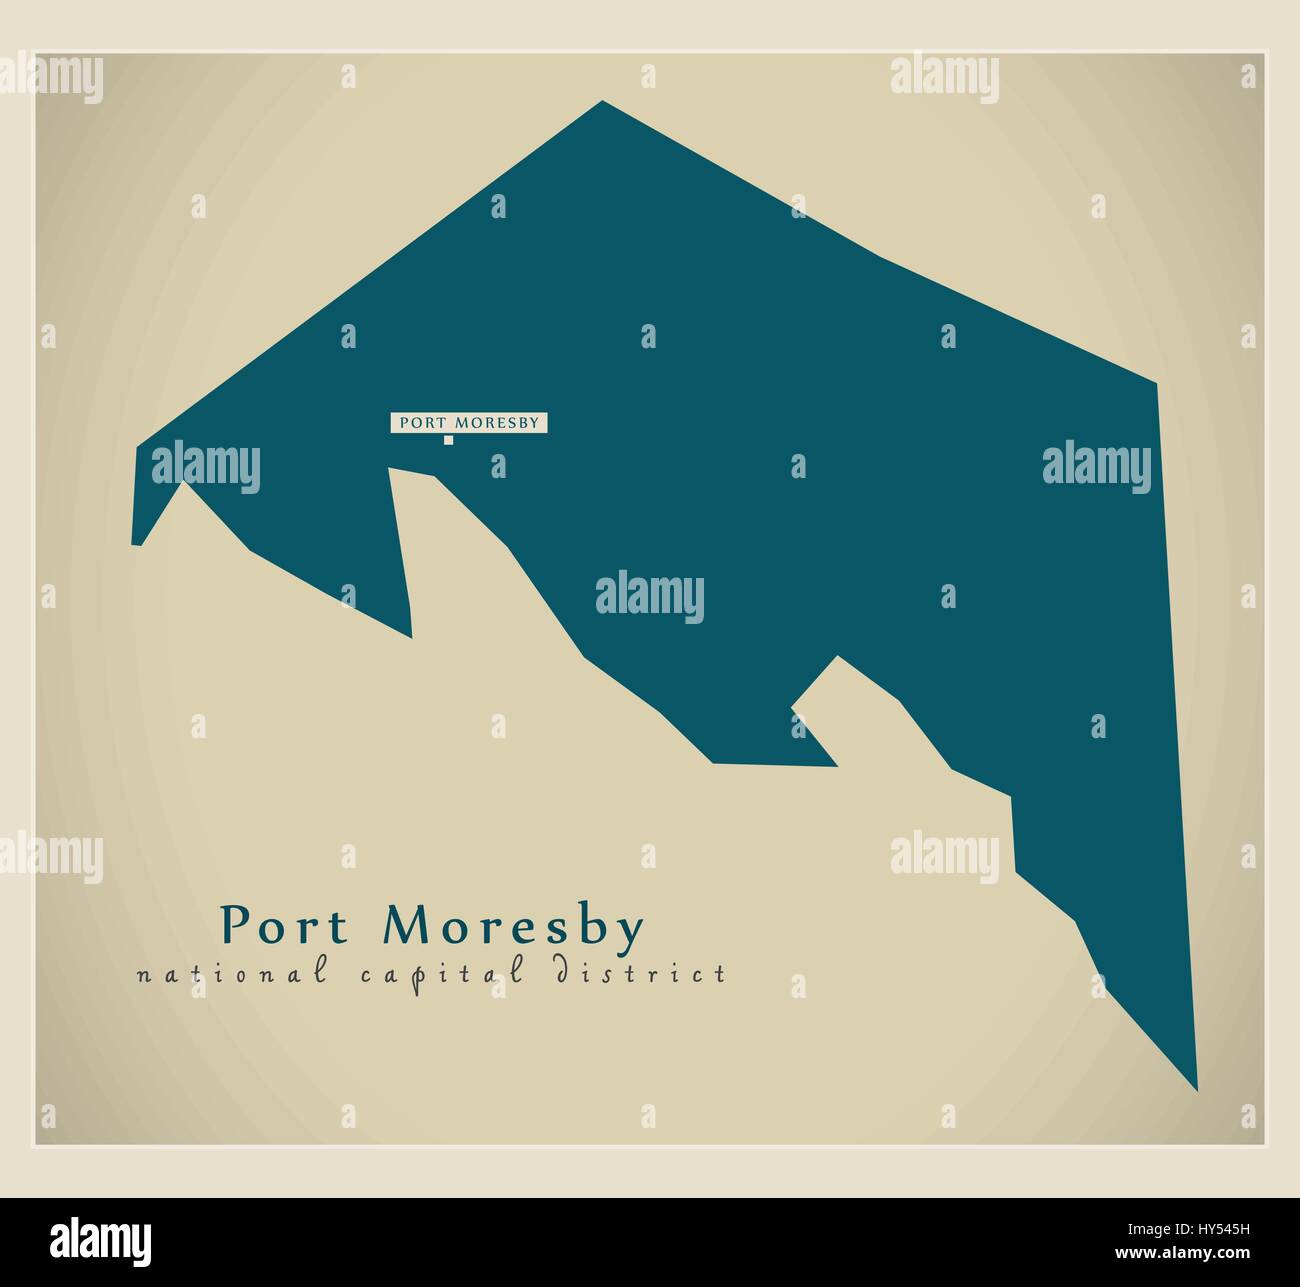 Mappa moderno - Port Moresby (National Capital District) PG Illustrazione Vettoriale